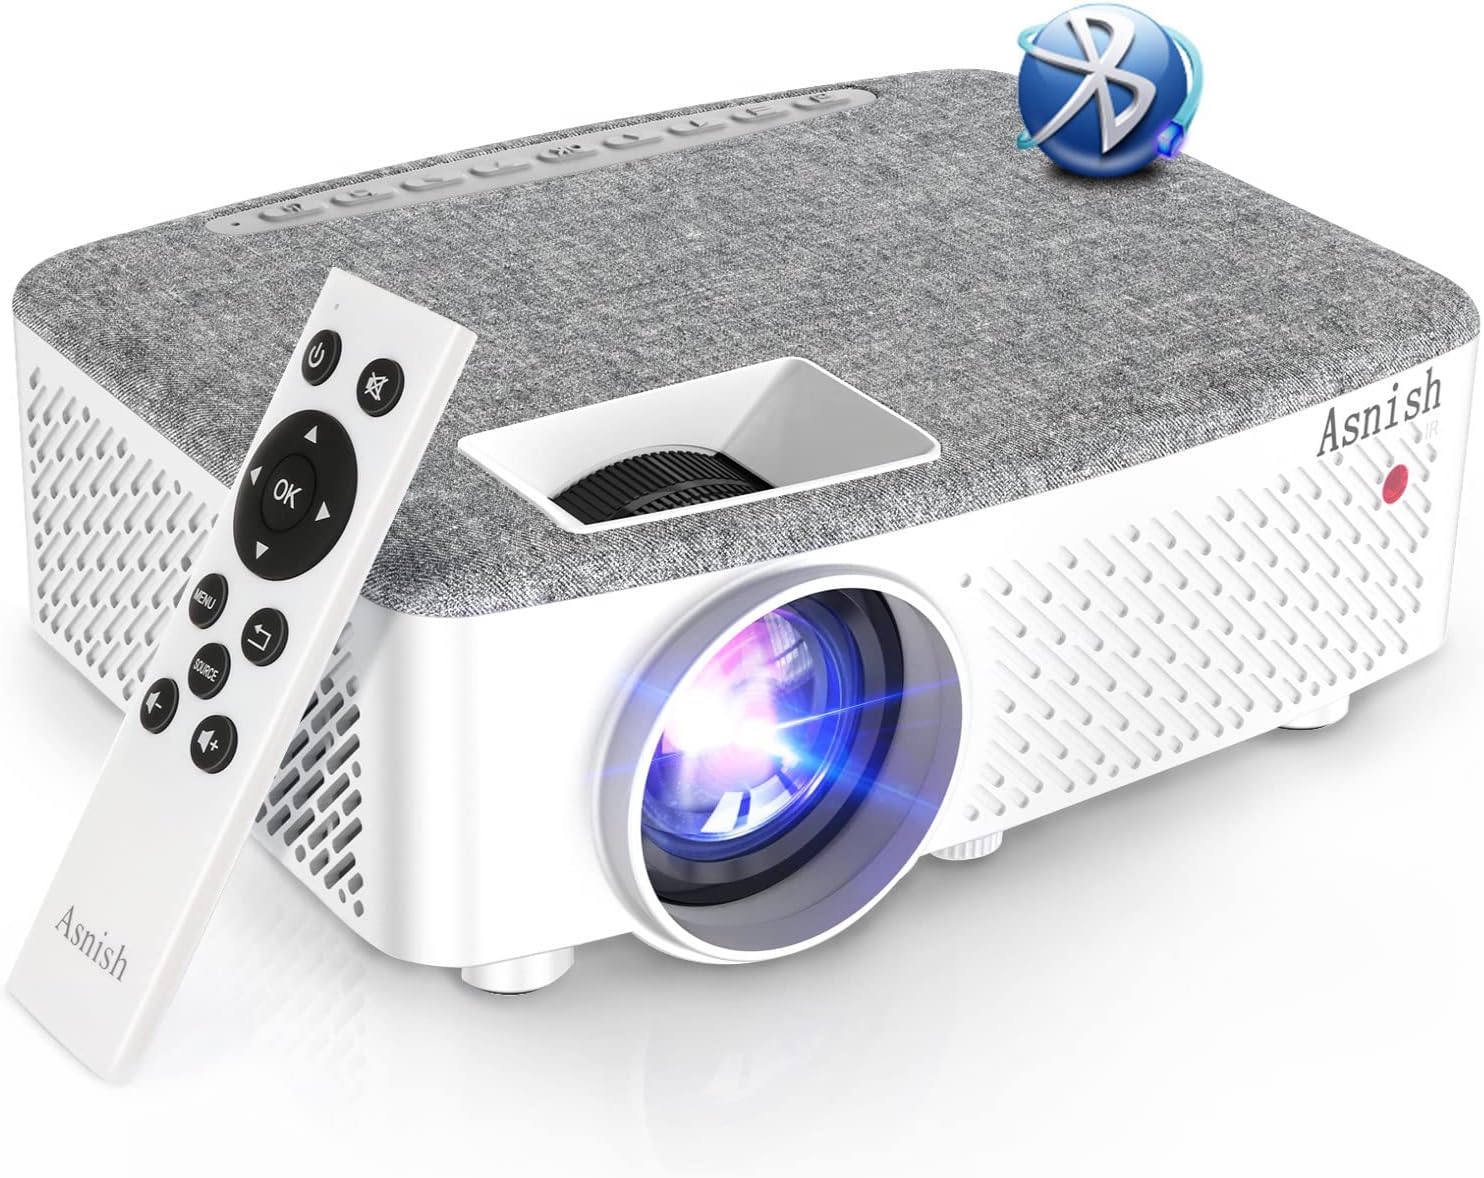 Mini proyector, proyector de video Full HD 1080P, proyector portátil p -  VIRTUAL MUEBLES